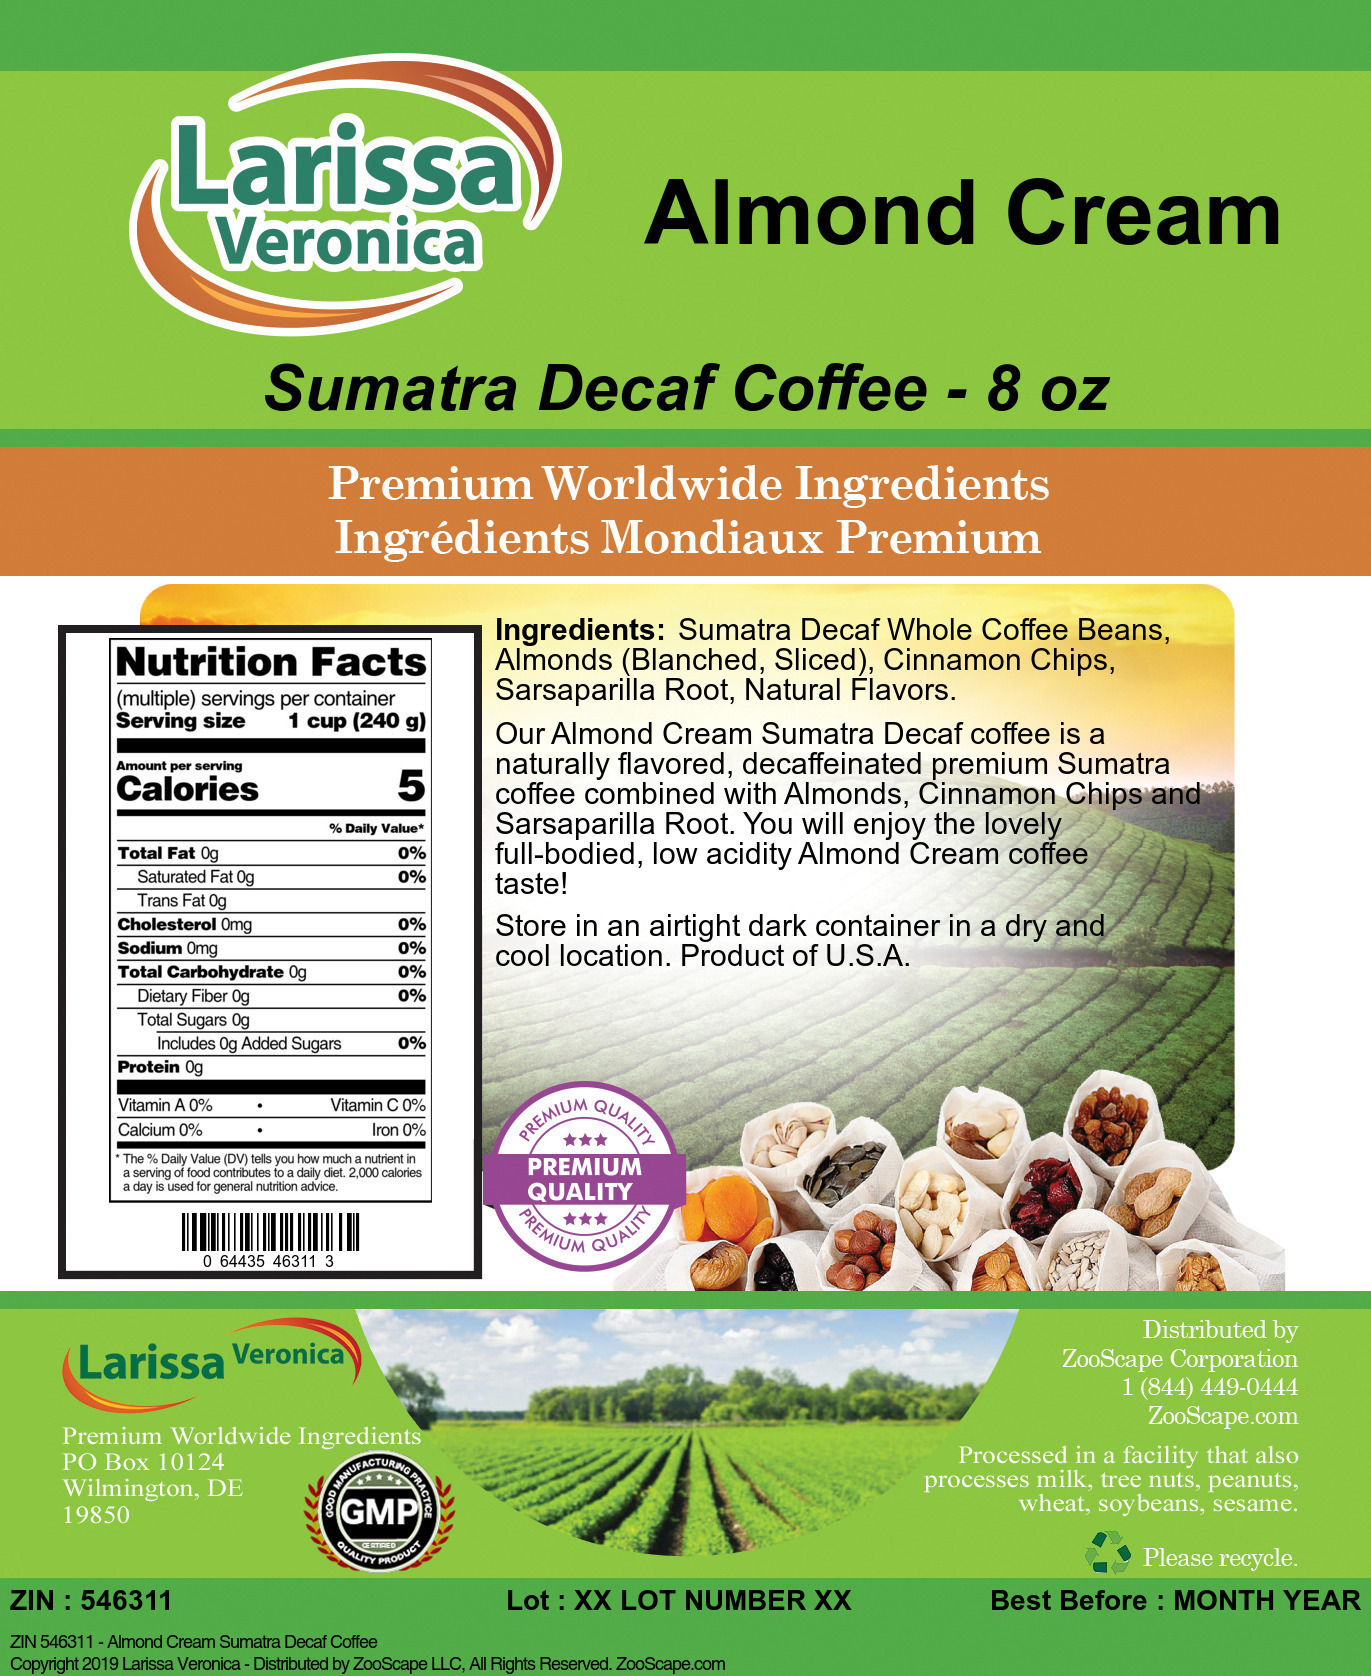 Almond Cream Sumatra Decaf Coffee - Label